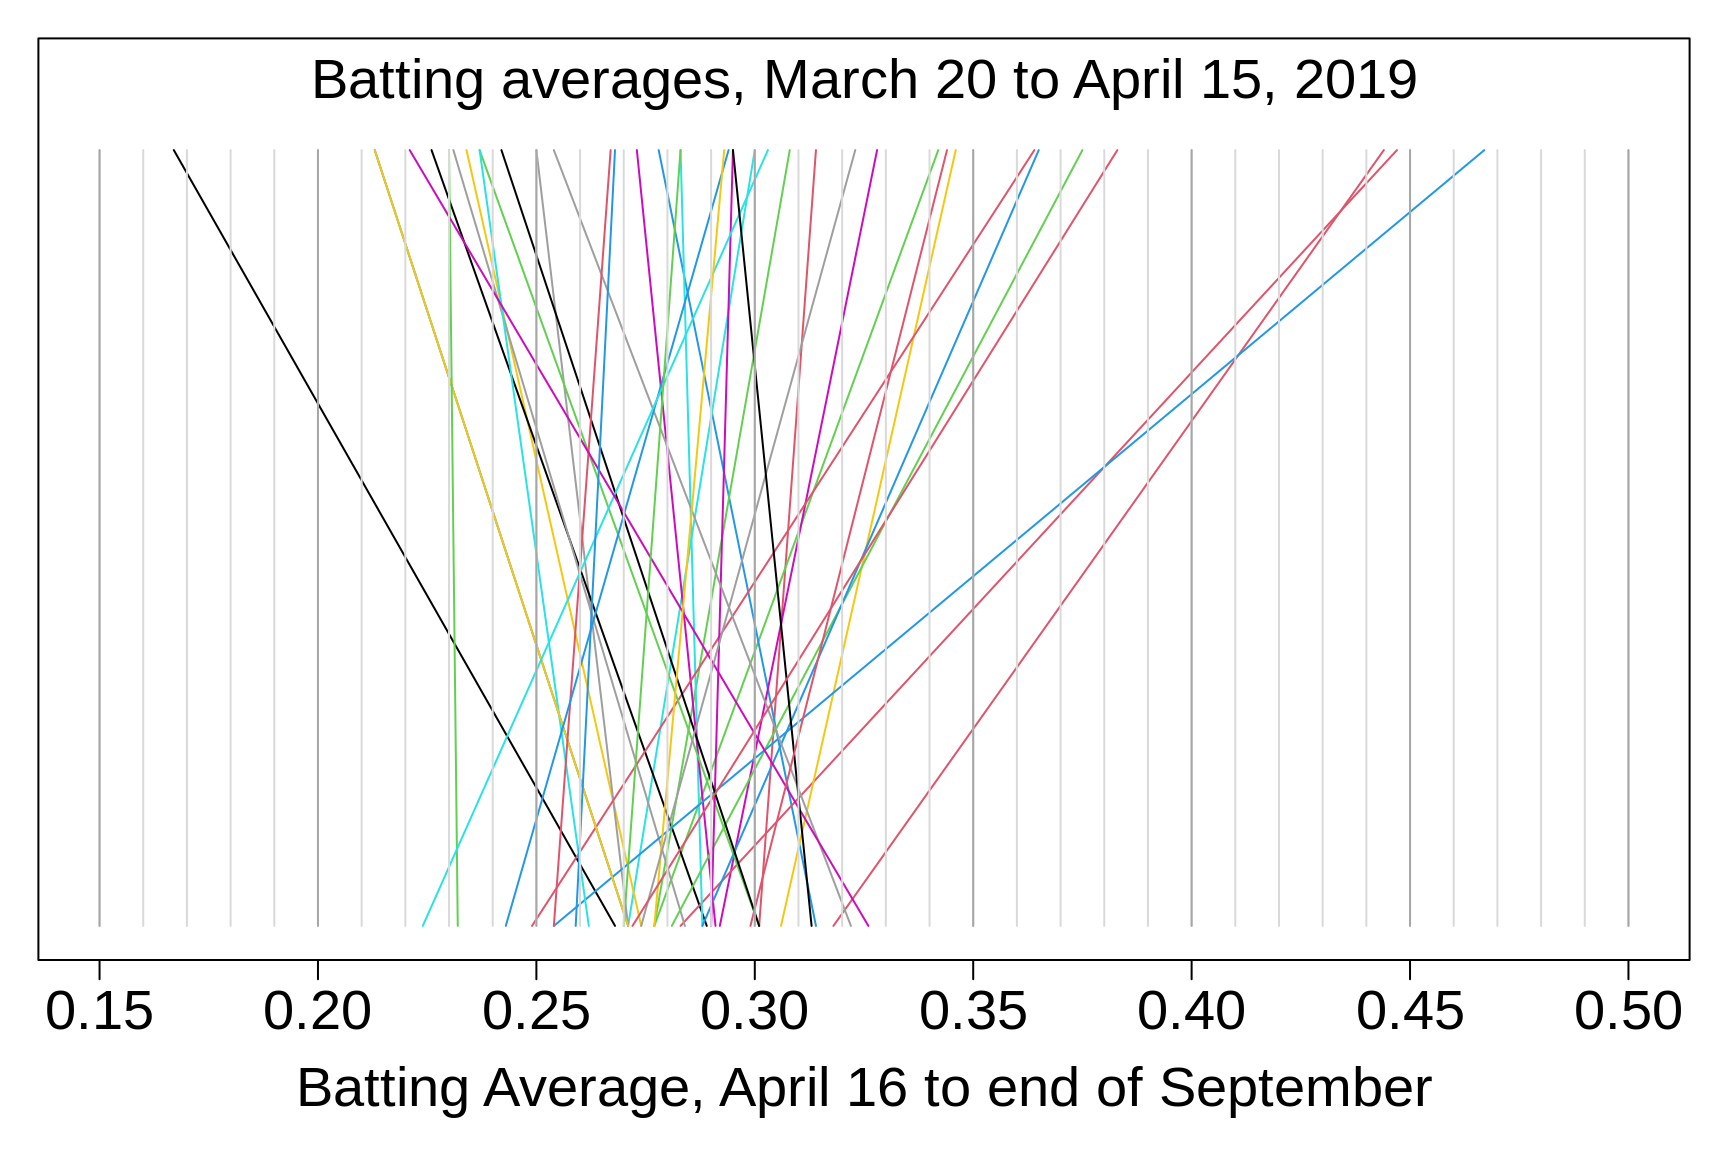 Batting averages of selected Major League baseball players, 2019